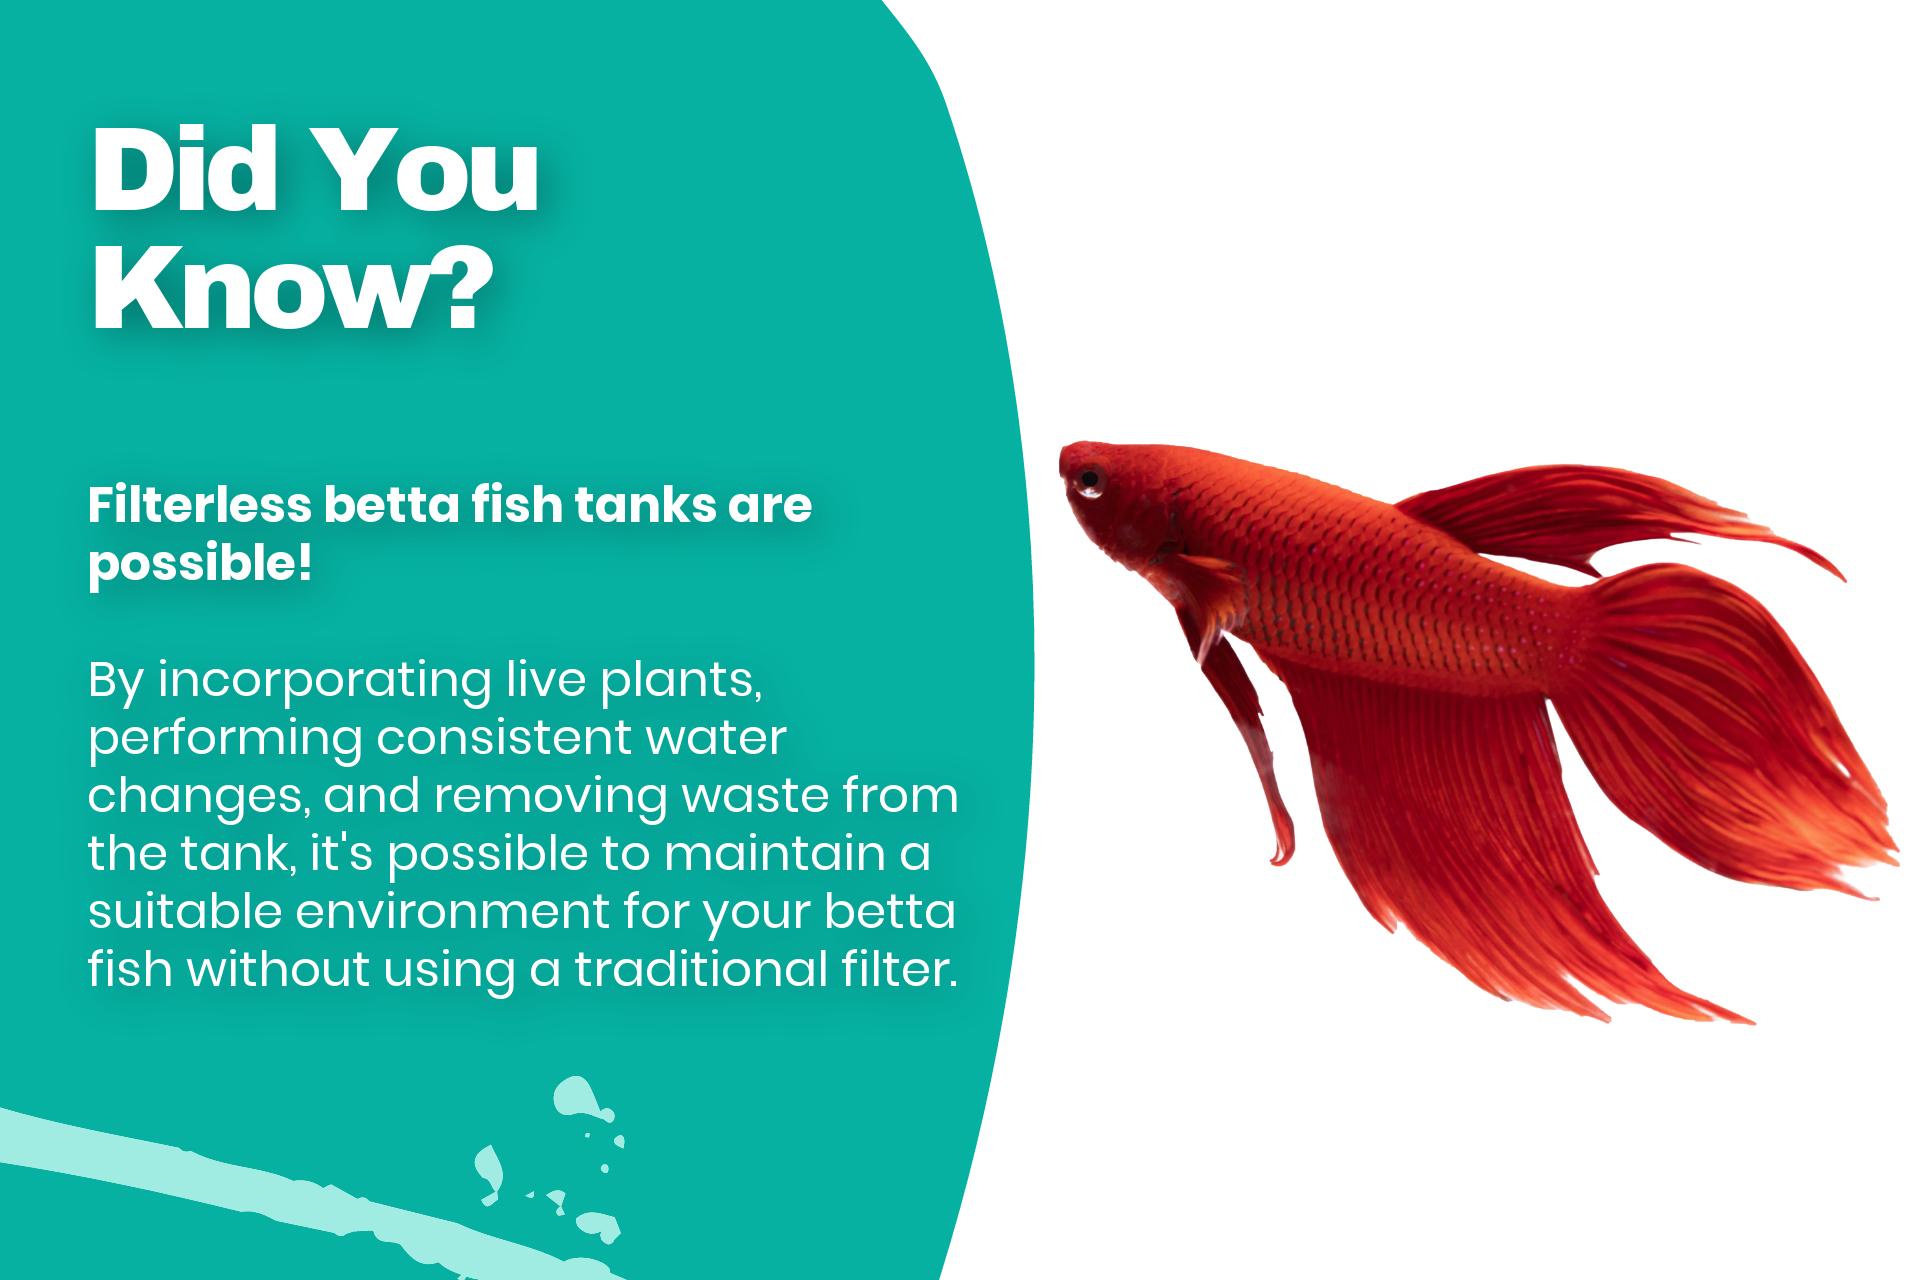 Filterless betta fish tanks are possible